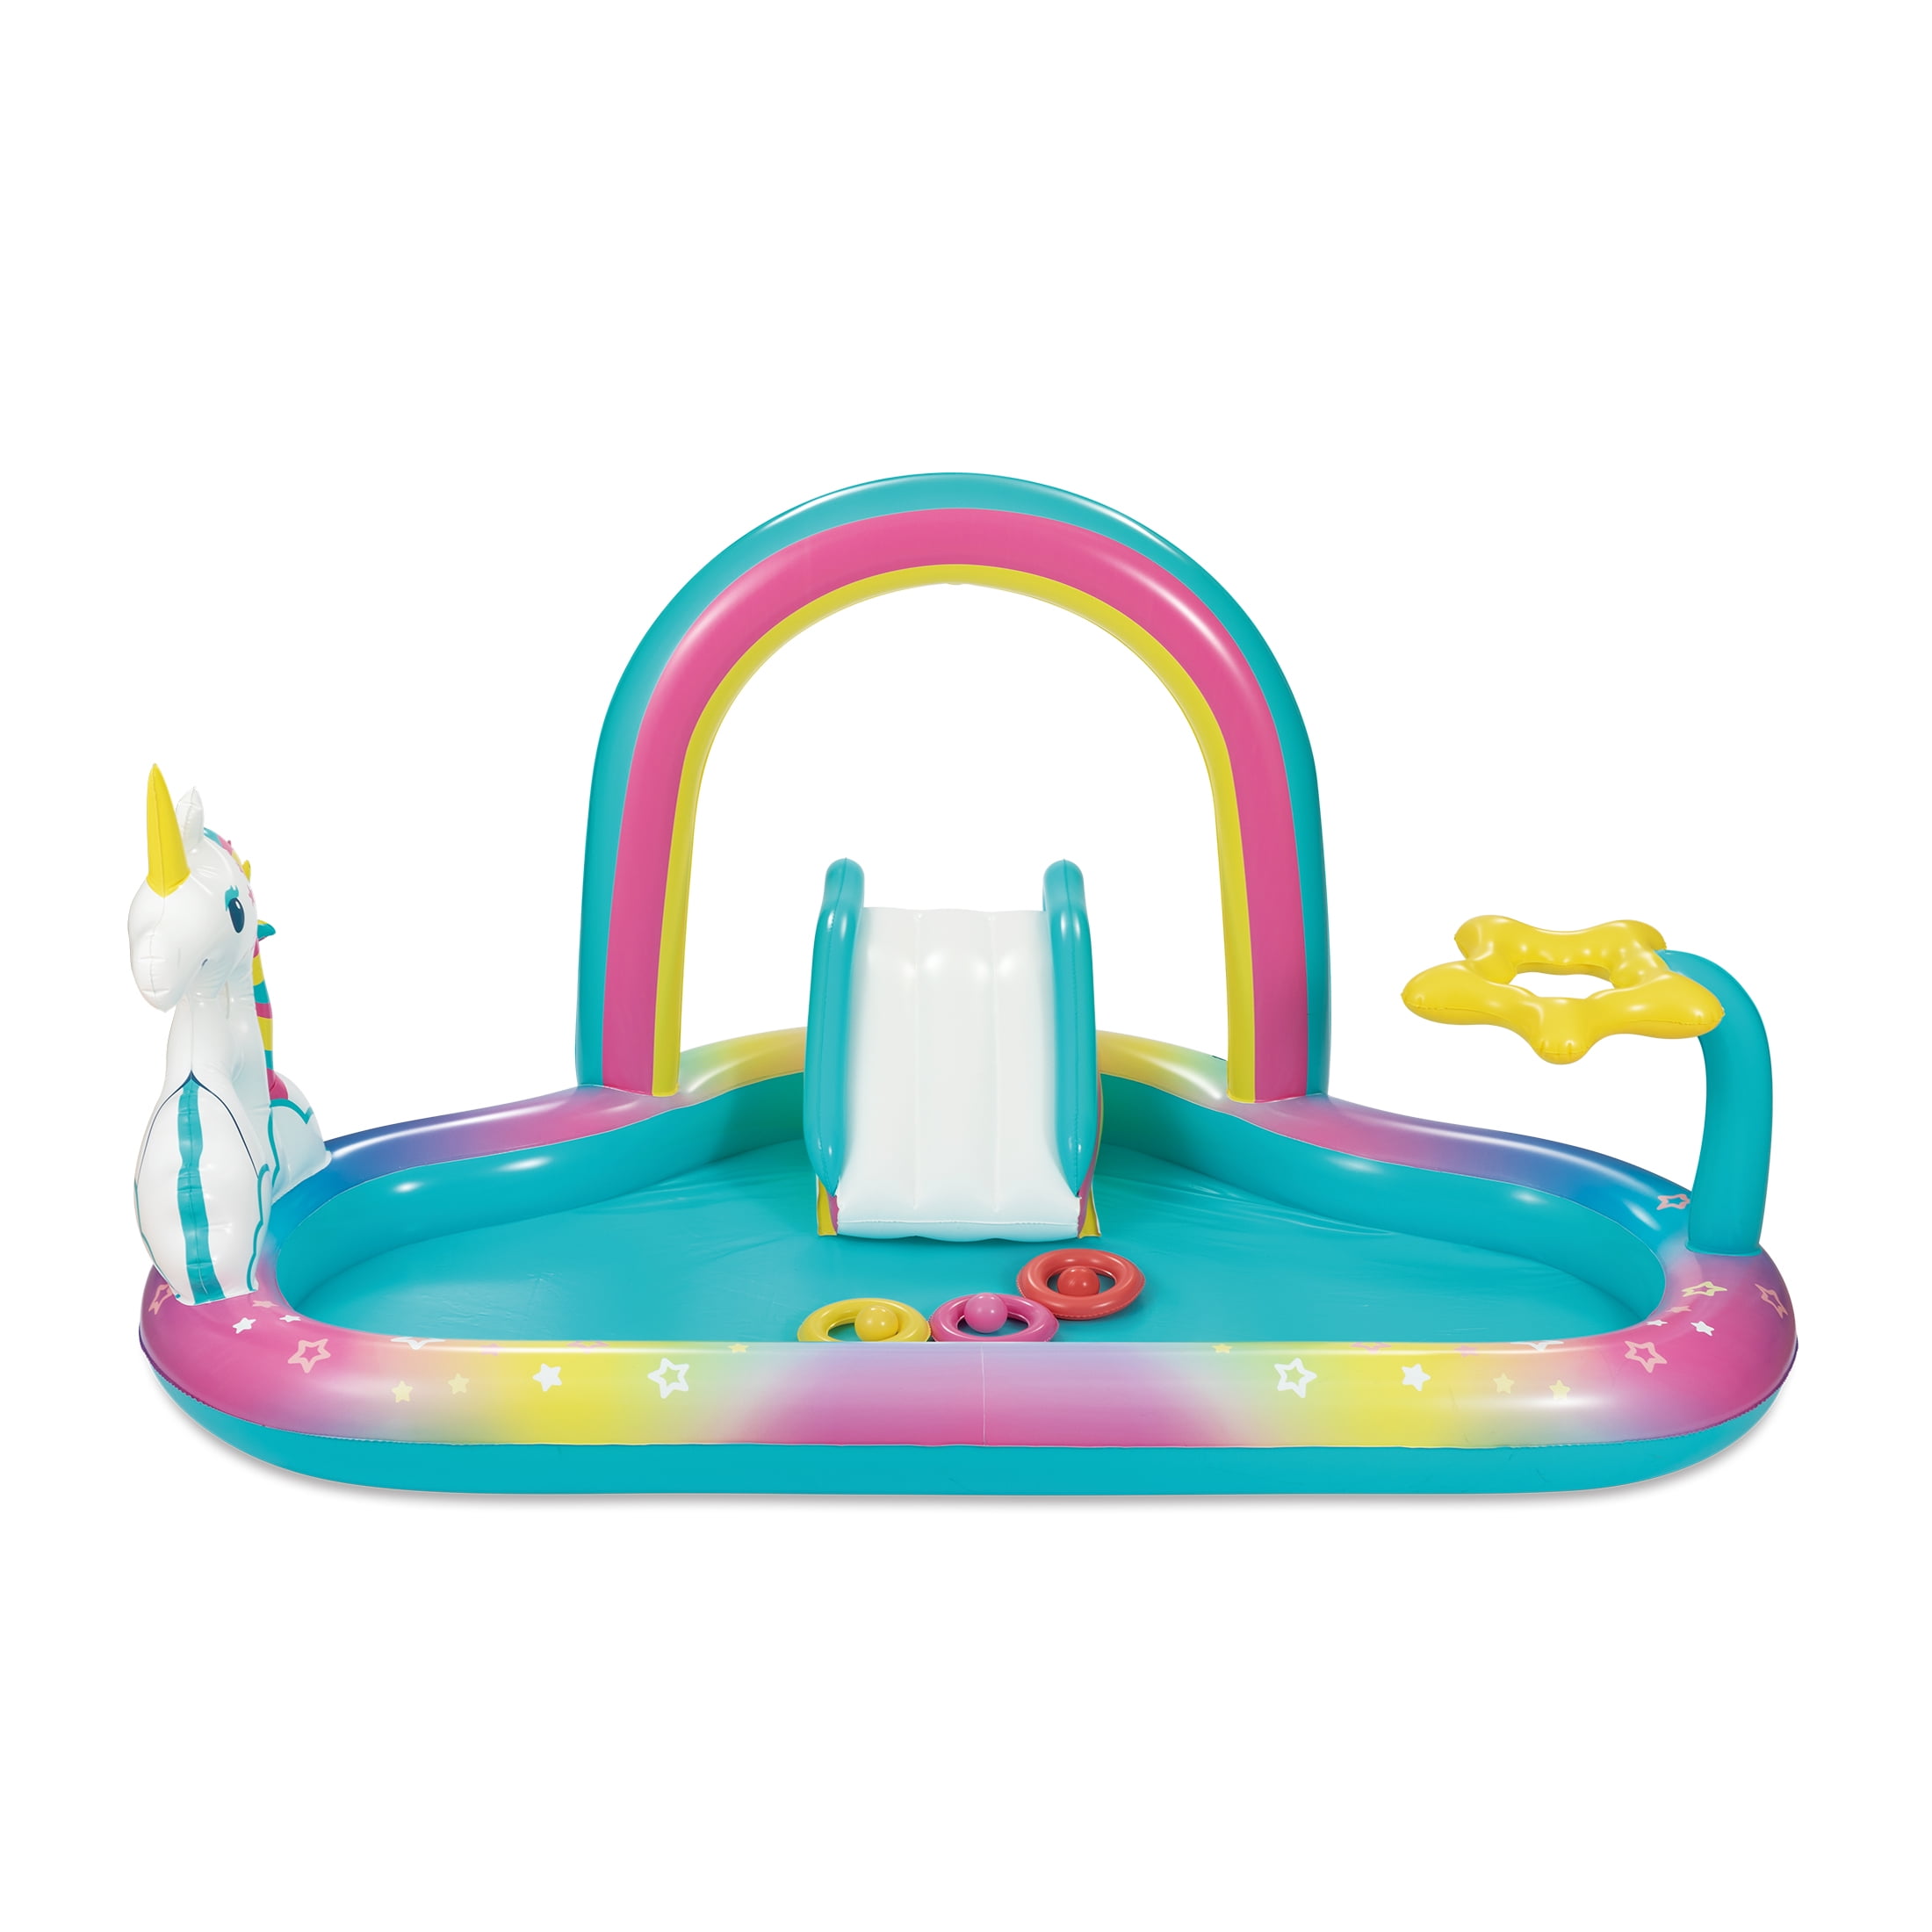 Intex Kids Inflatable Candy Zone Swim Play Center Kids Splash Pool 